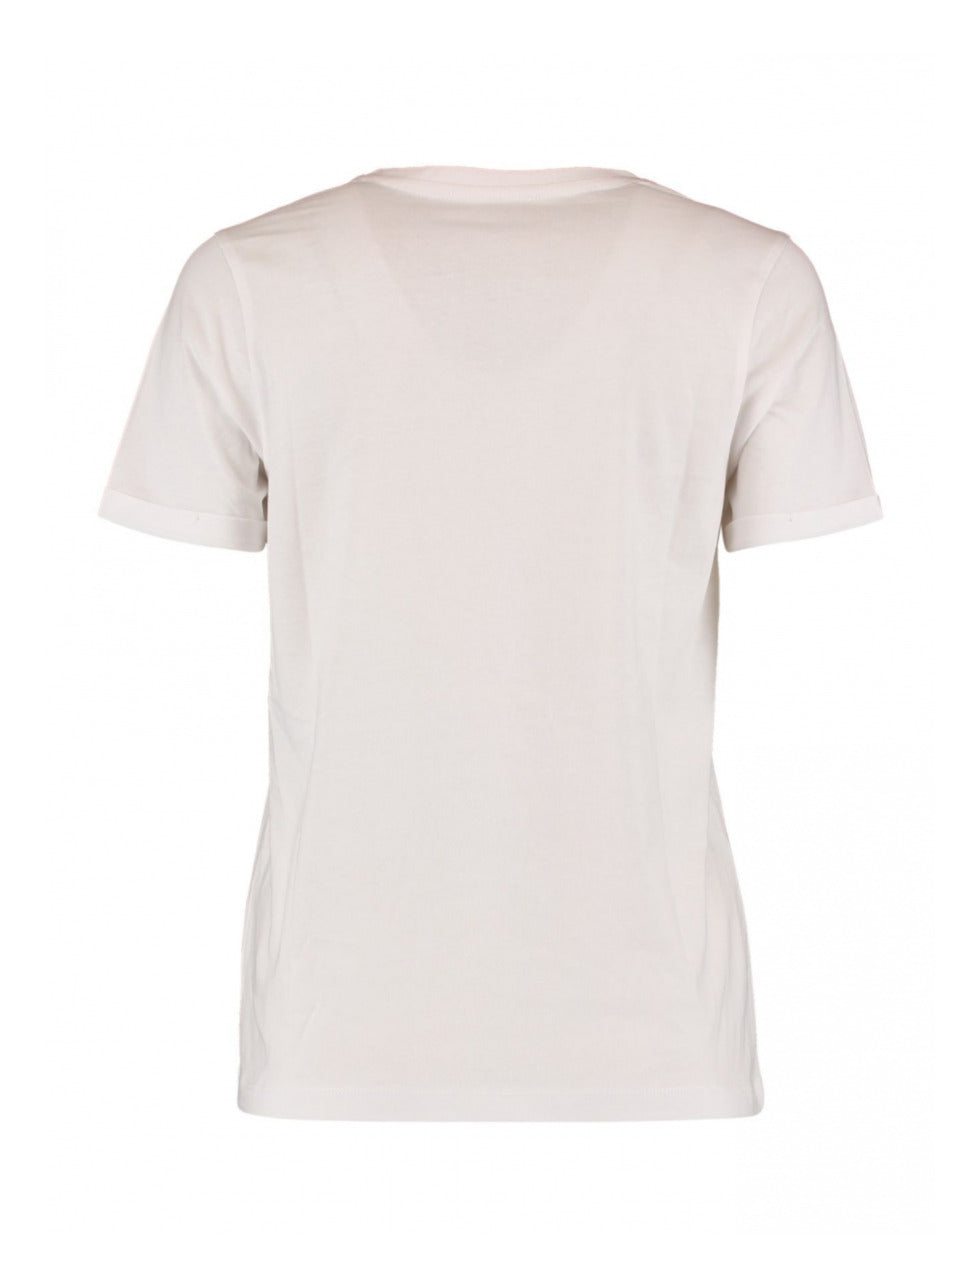 Valea White Animal Prints T-Shirt